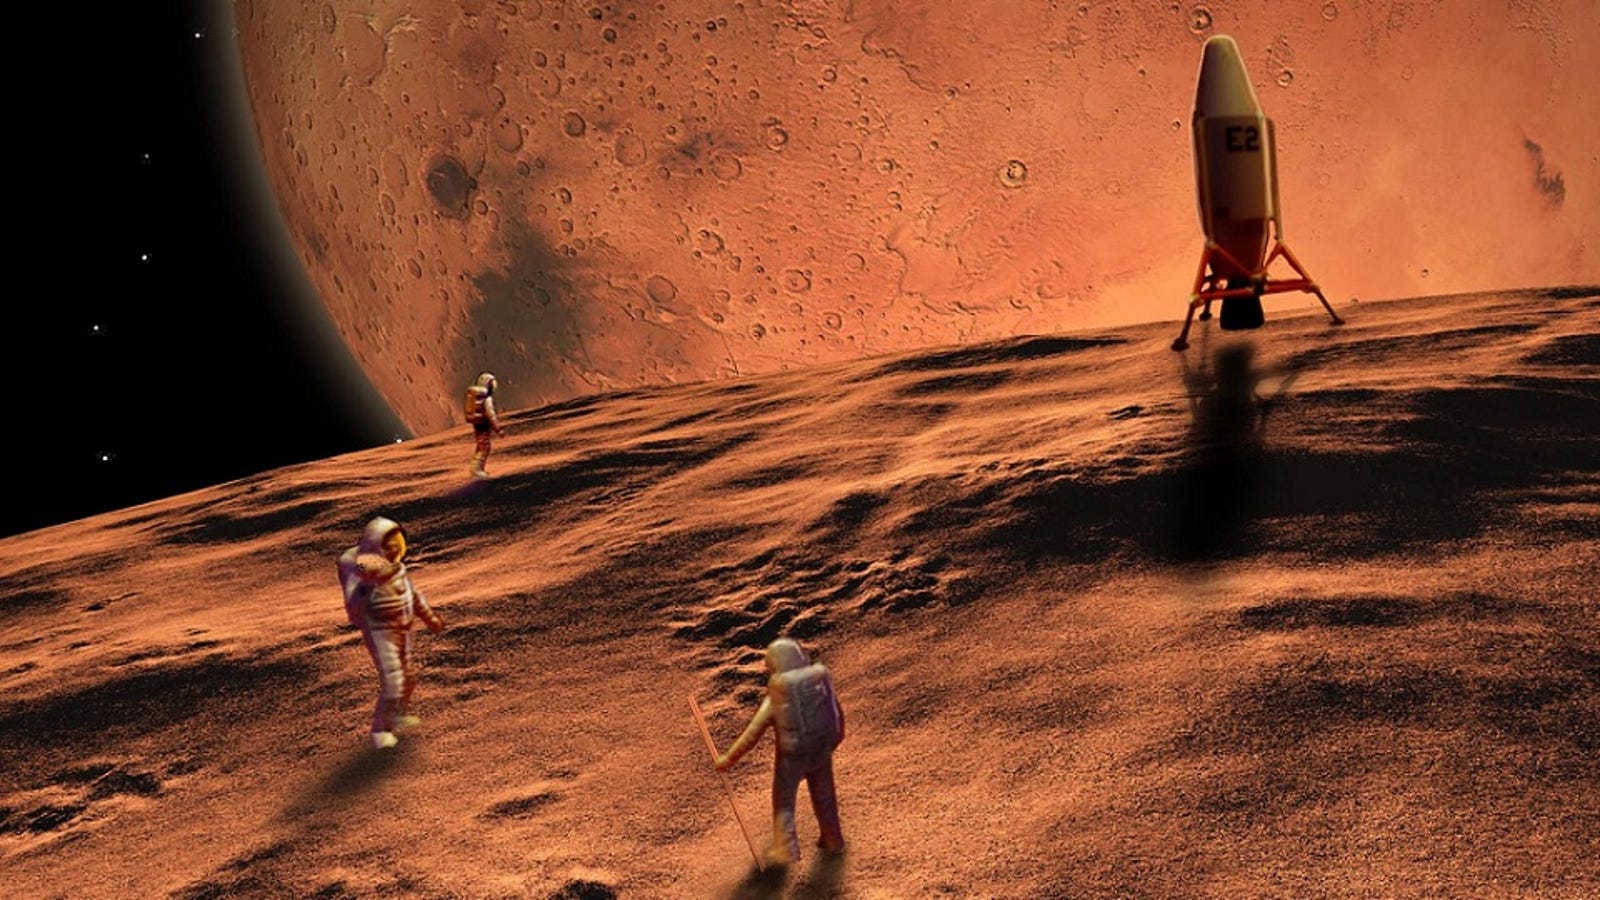 Есть ли жизнь на планете марс. Космонавт на Марсе. Марс Планета жизнь. Планета Марс и марсиане. Полет на Венеру.